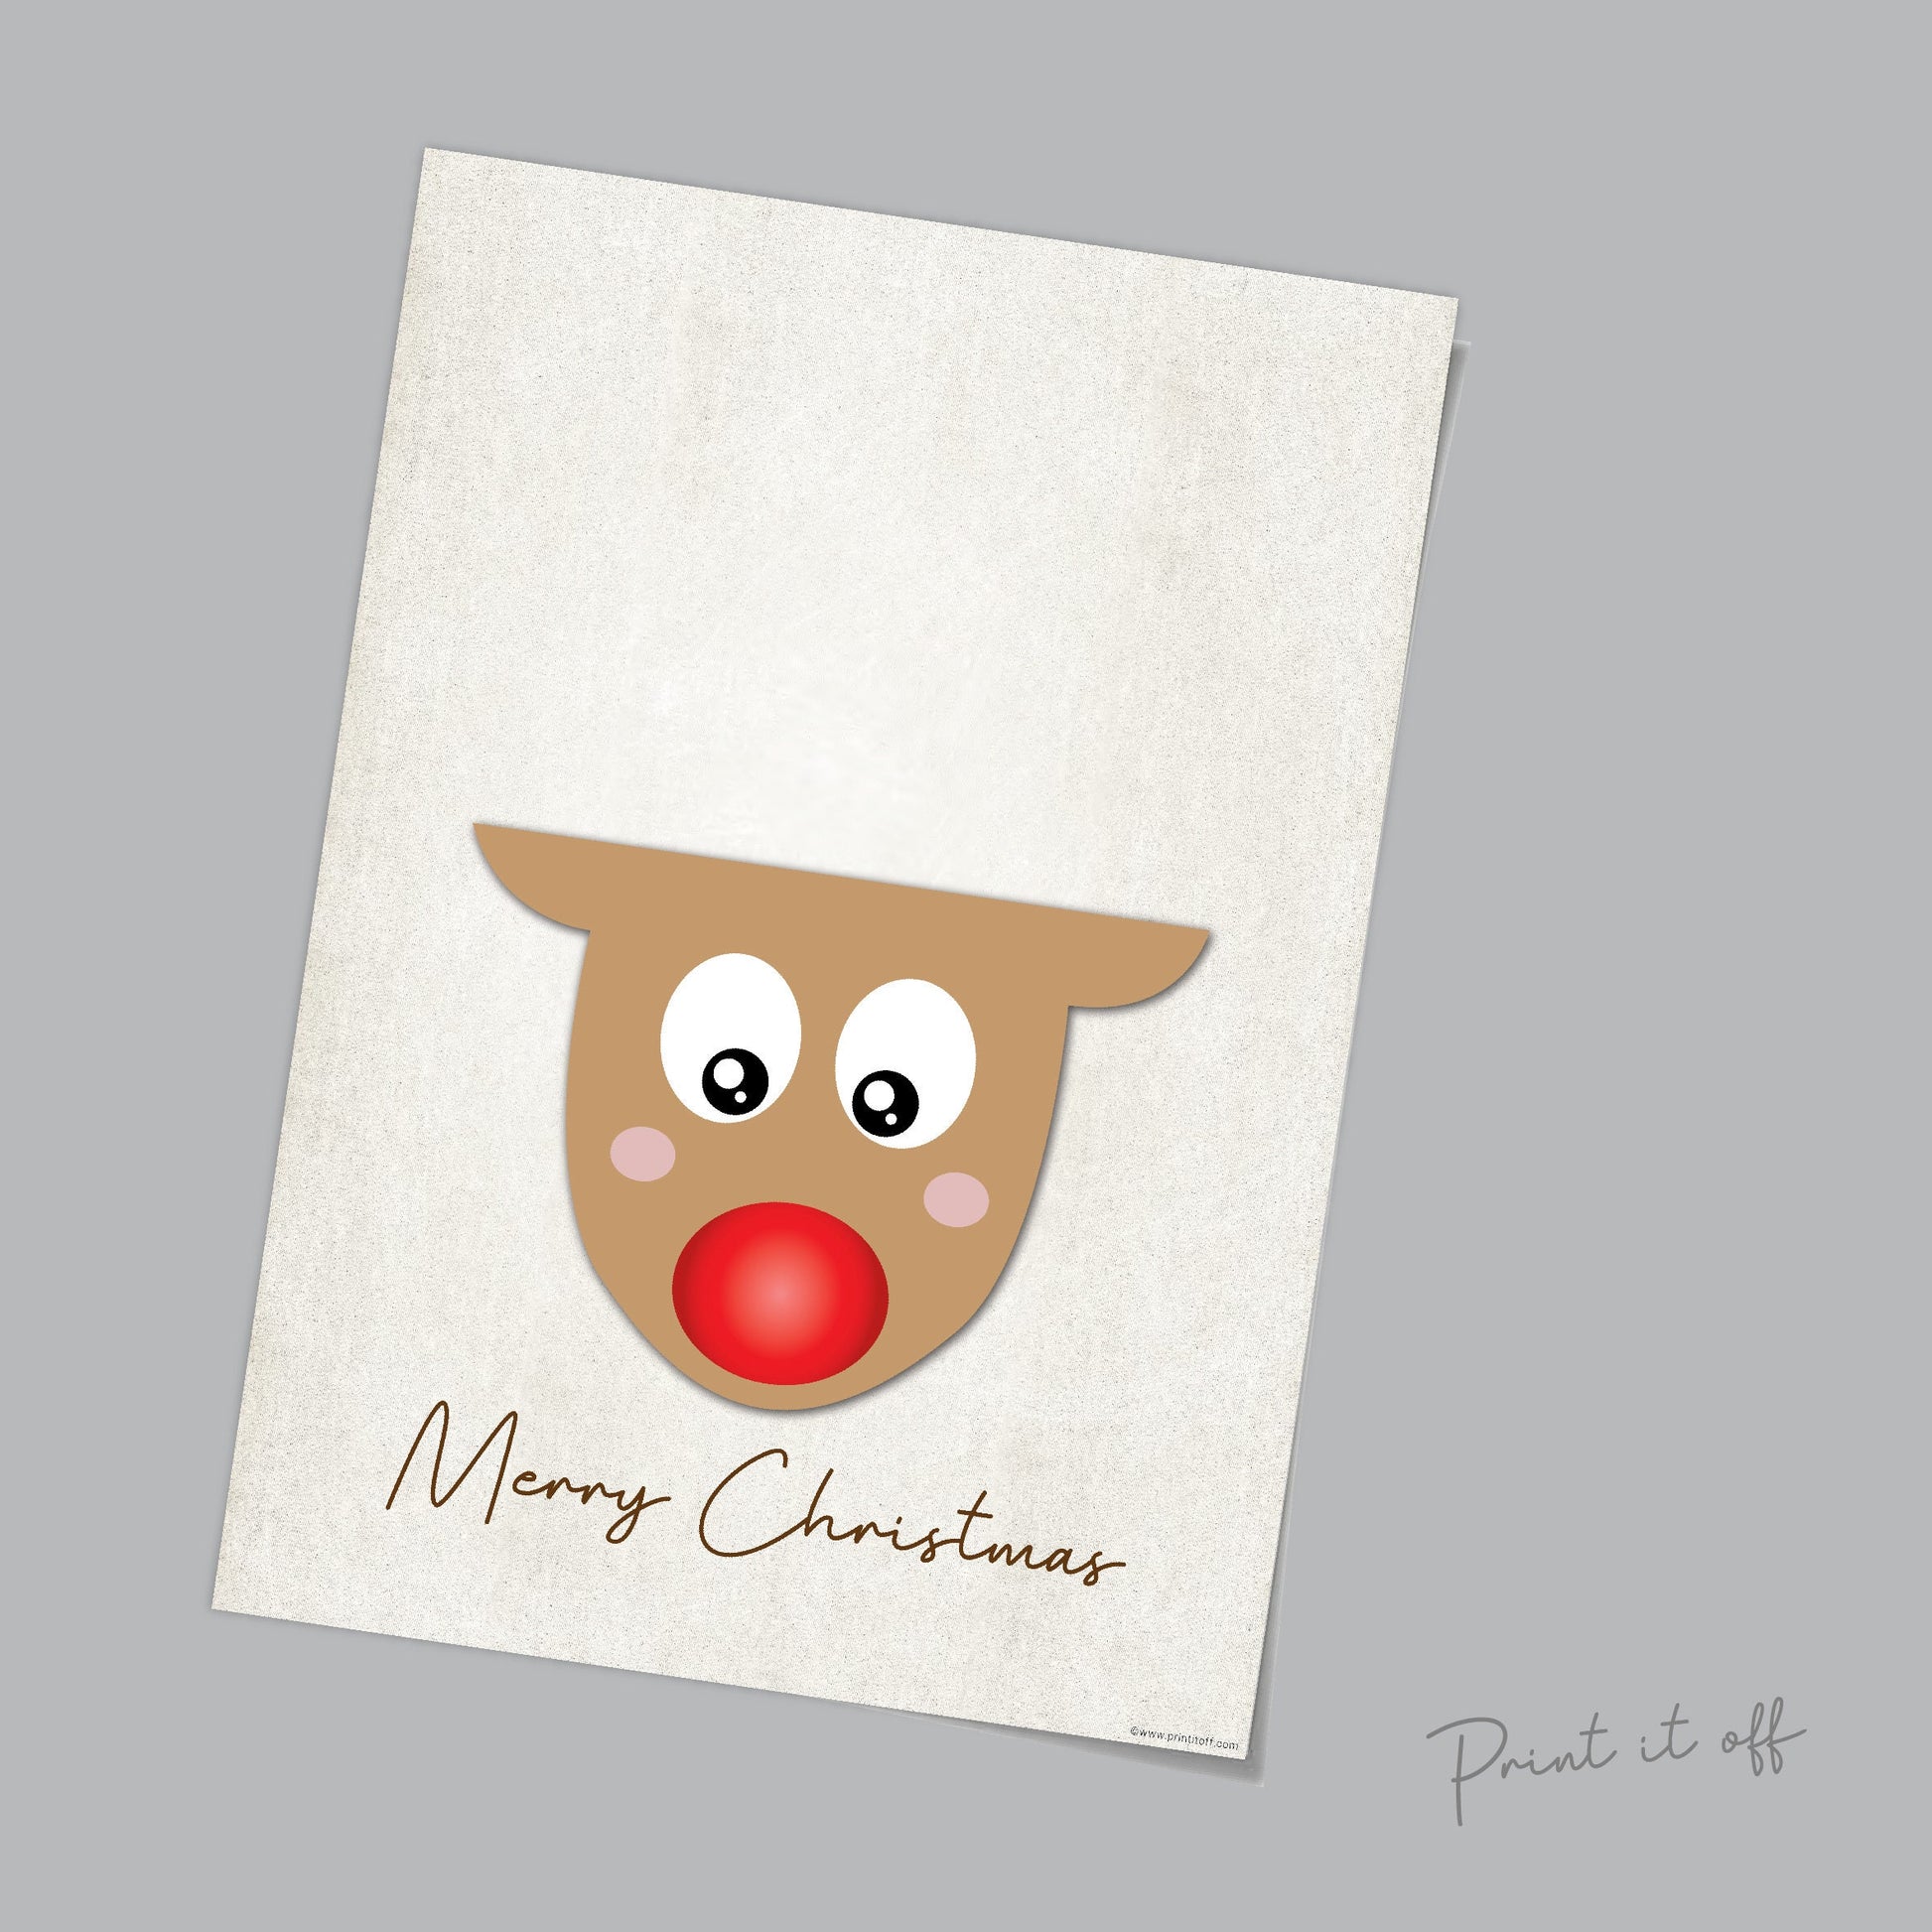 Merry Christmas Reindeer / Christmas Xmas Handprint Art Craft / Baby Kids Toddler Hands  / Xmas Craft Keepsake Memory Print Card 0095